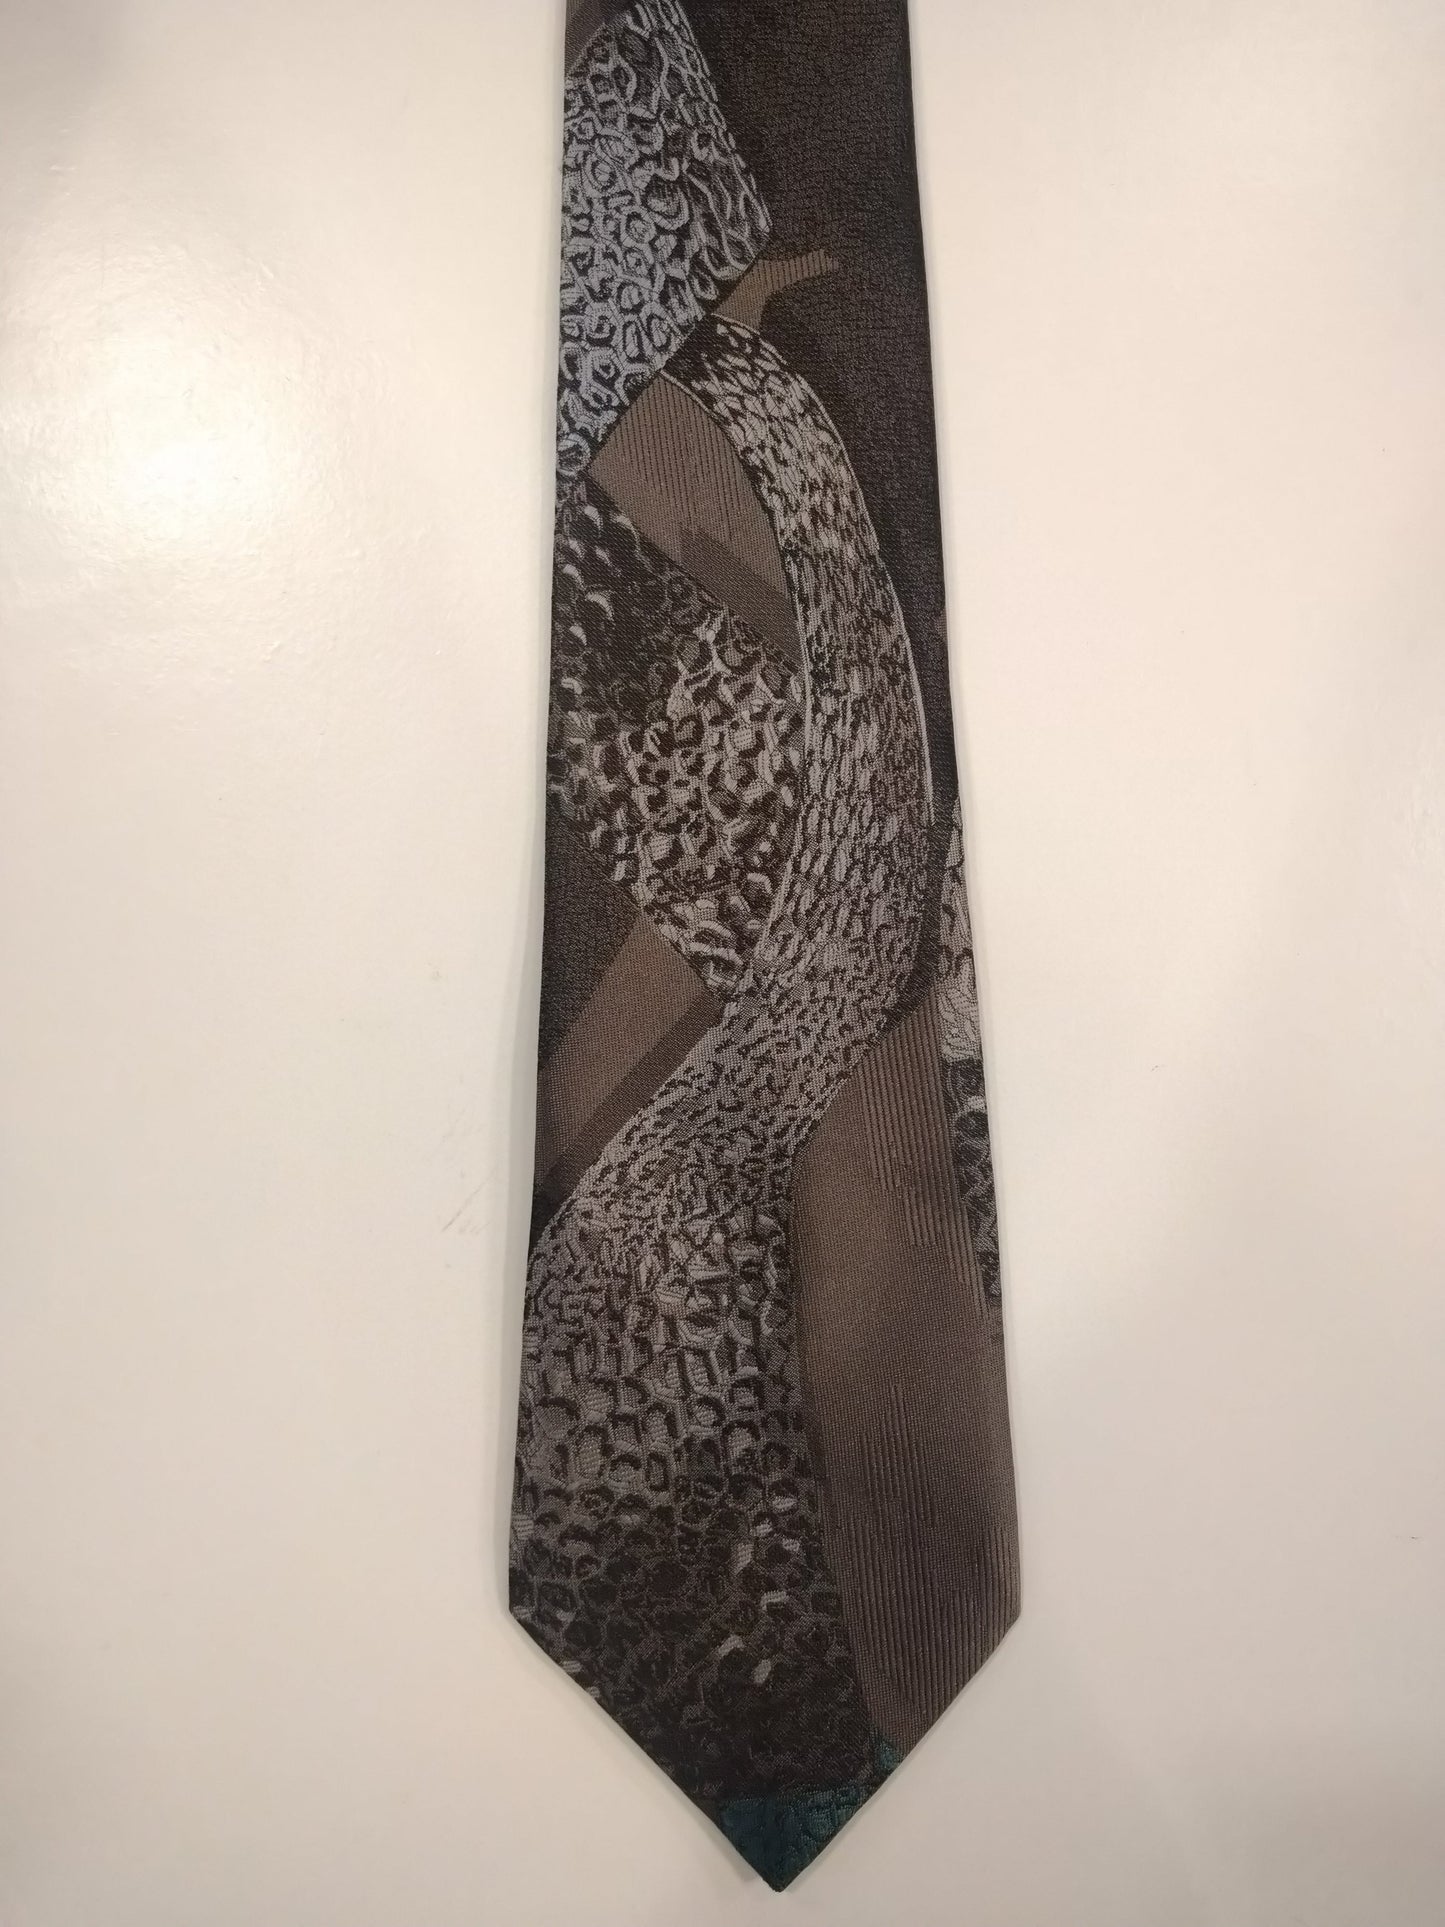 Rael Brook Polyester tie. Gray brown green silver shiny motif.